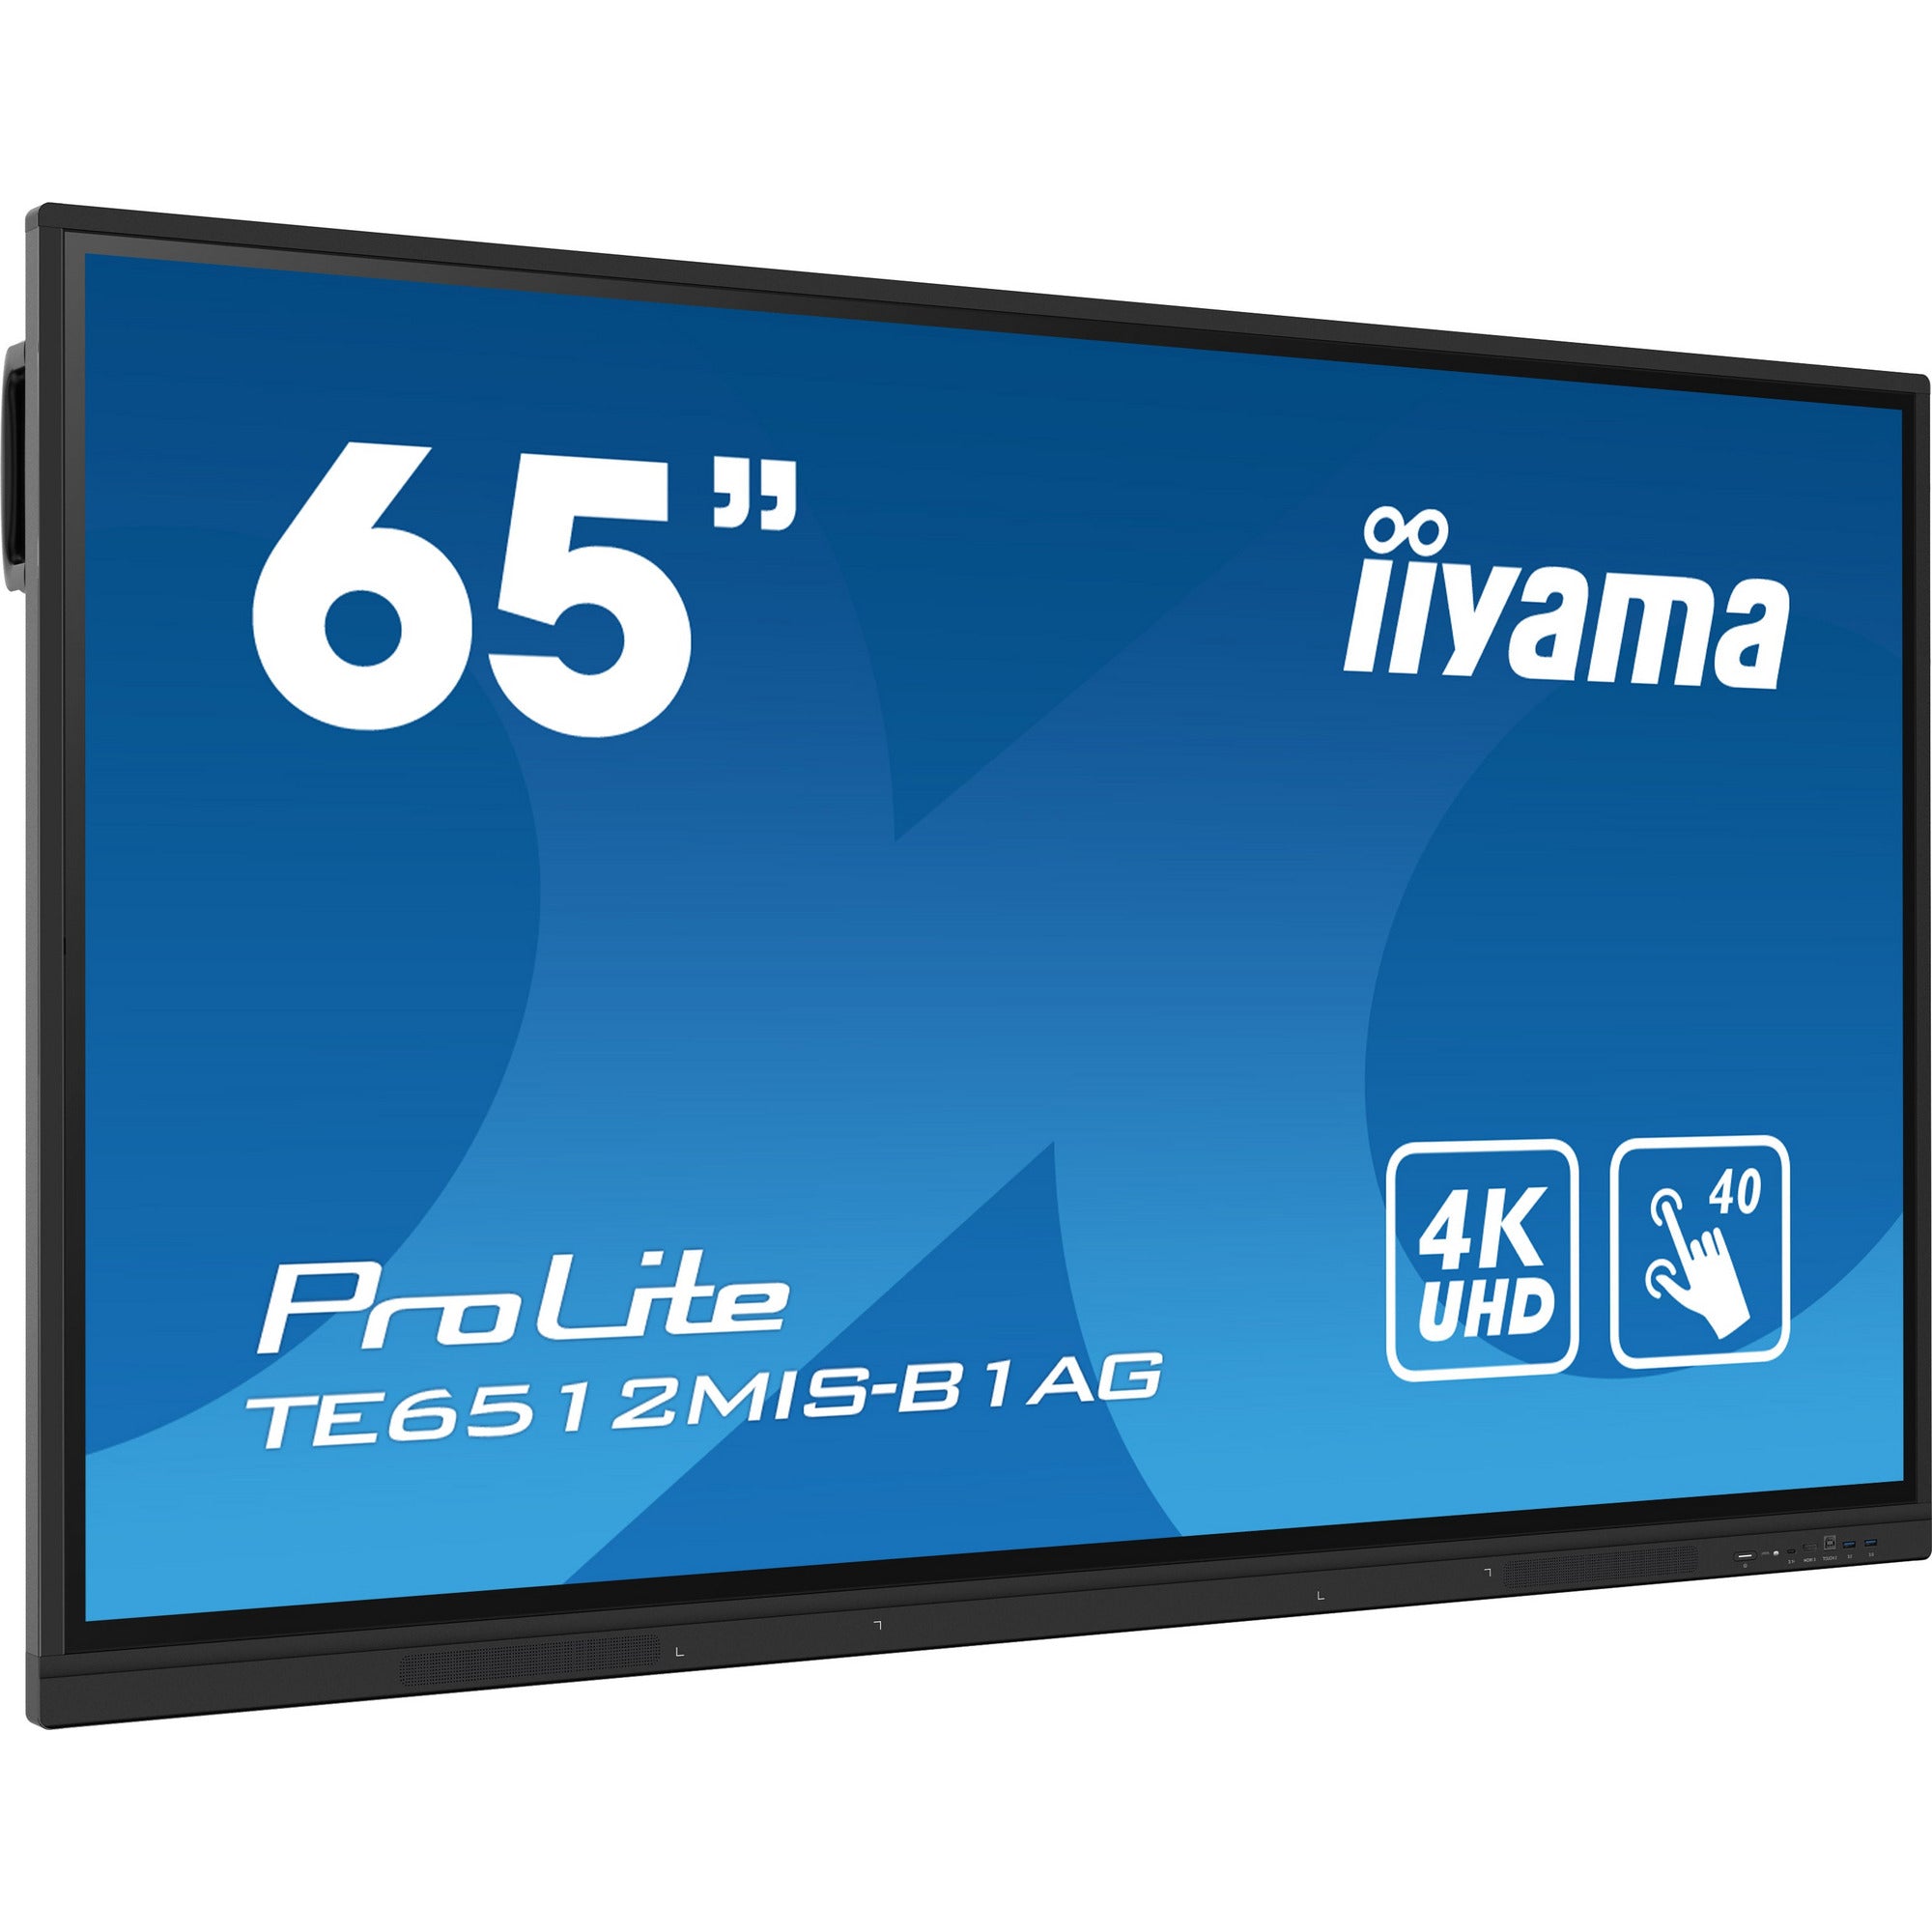 Iiyama ProLite TE6512MIS-B1AG 65" Interactive 4K UHD Touchscreen featuring a 4K interface with User Profiles